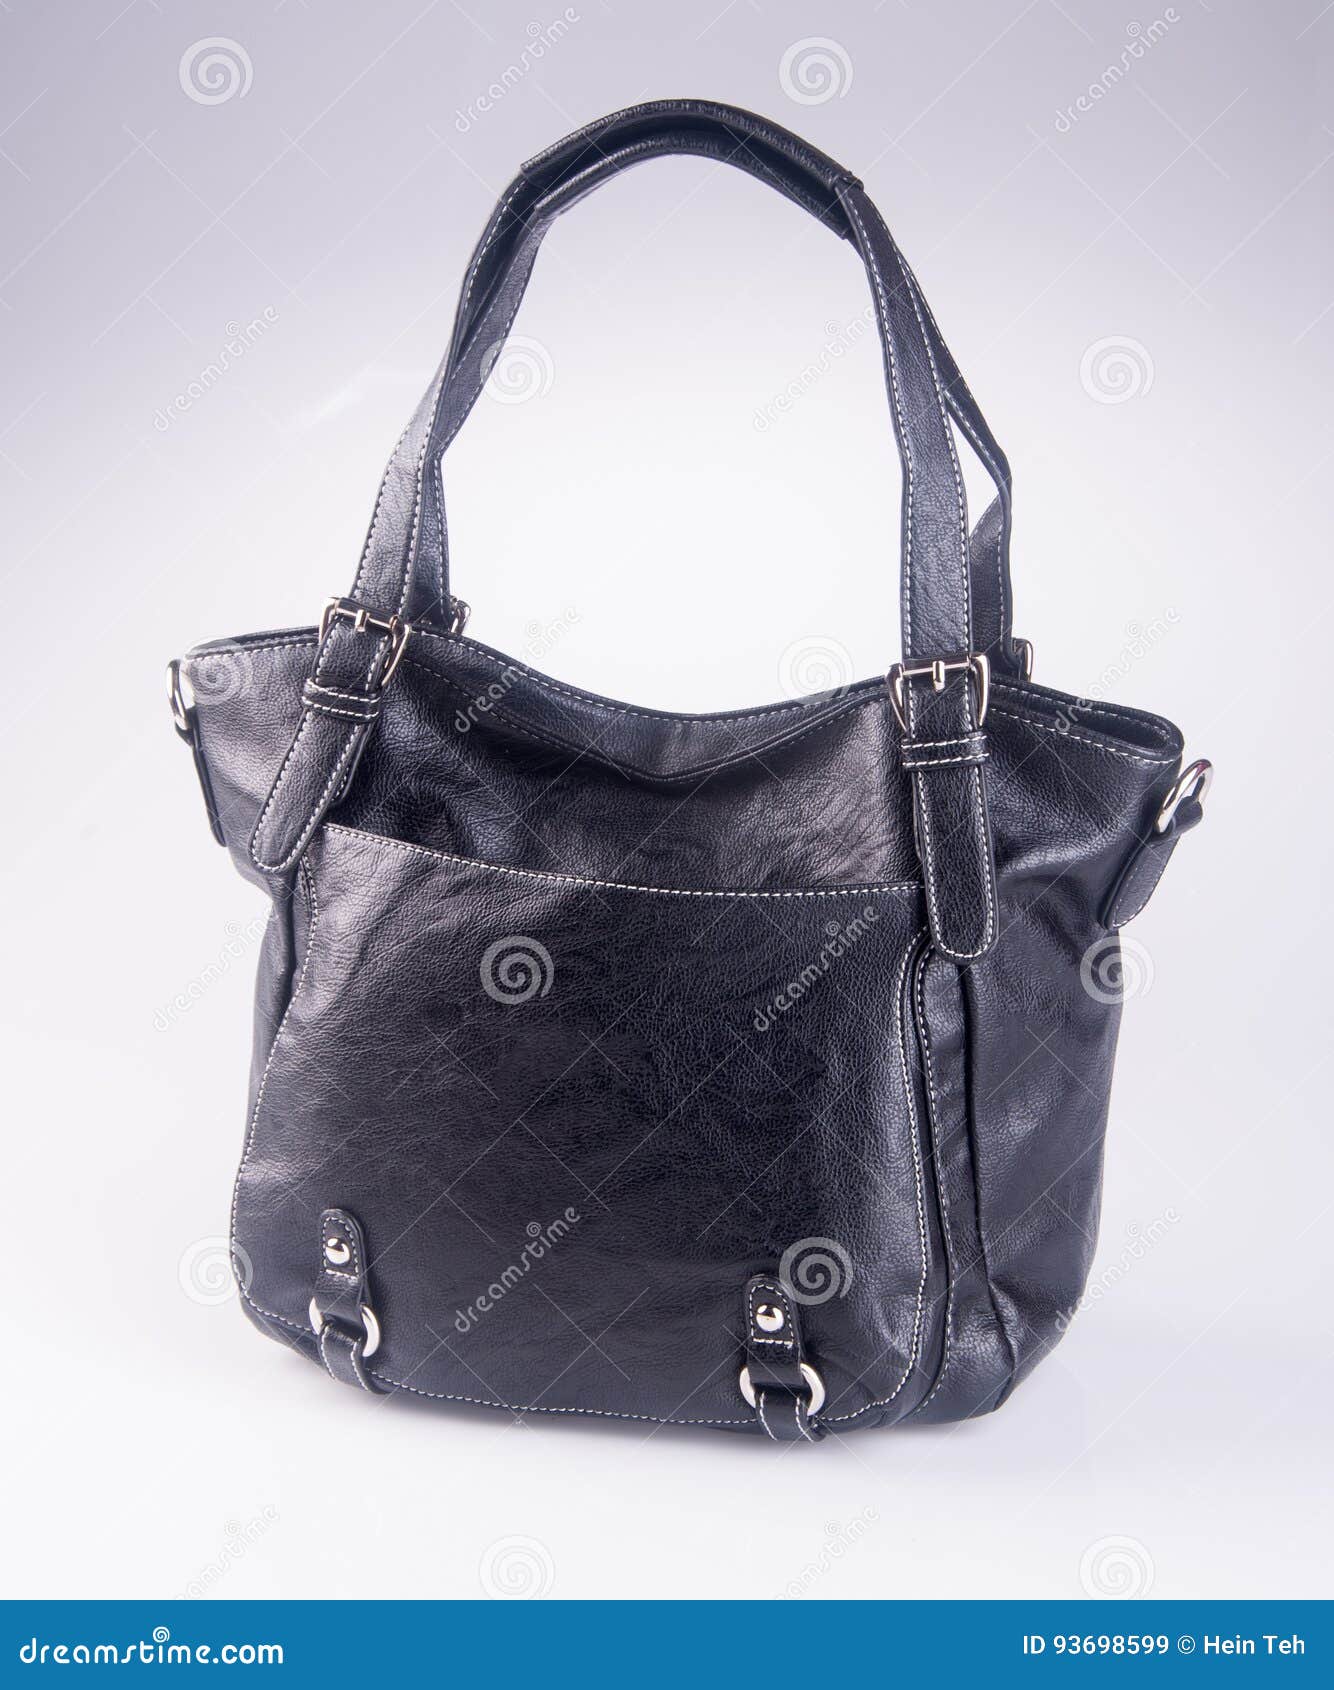 Bag. Black Colour Fashion Woman Bag on a Background. Stock Image ...